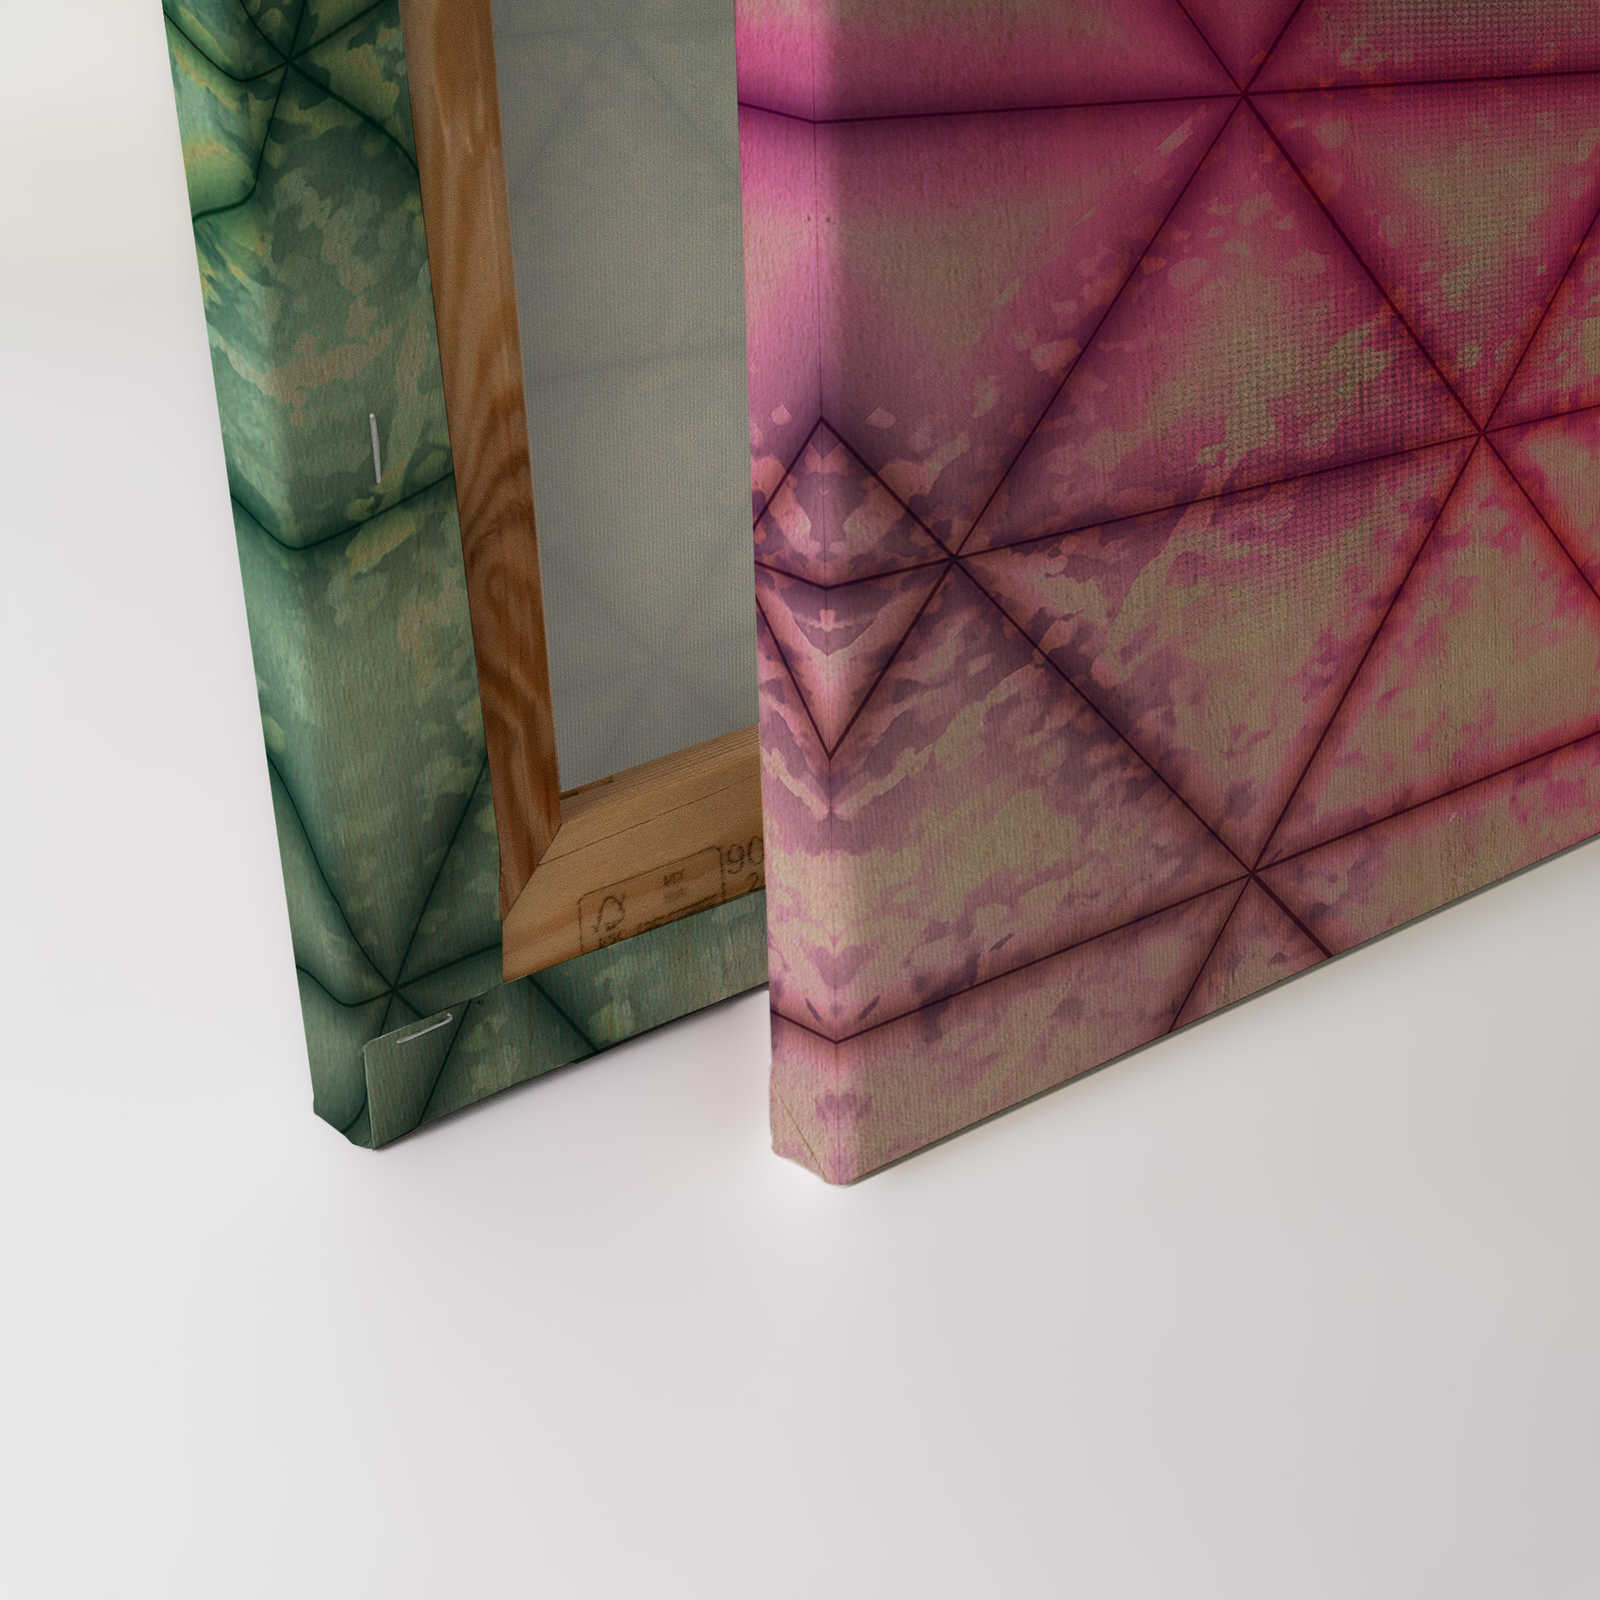             Cuadro lienzo triángulo geométrico en aspecto madera | verde, rosa - 0,90 m x 0,60 m
        